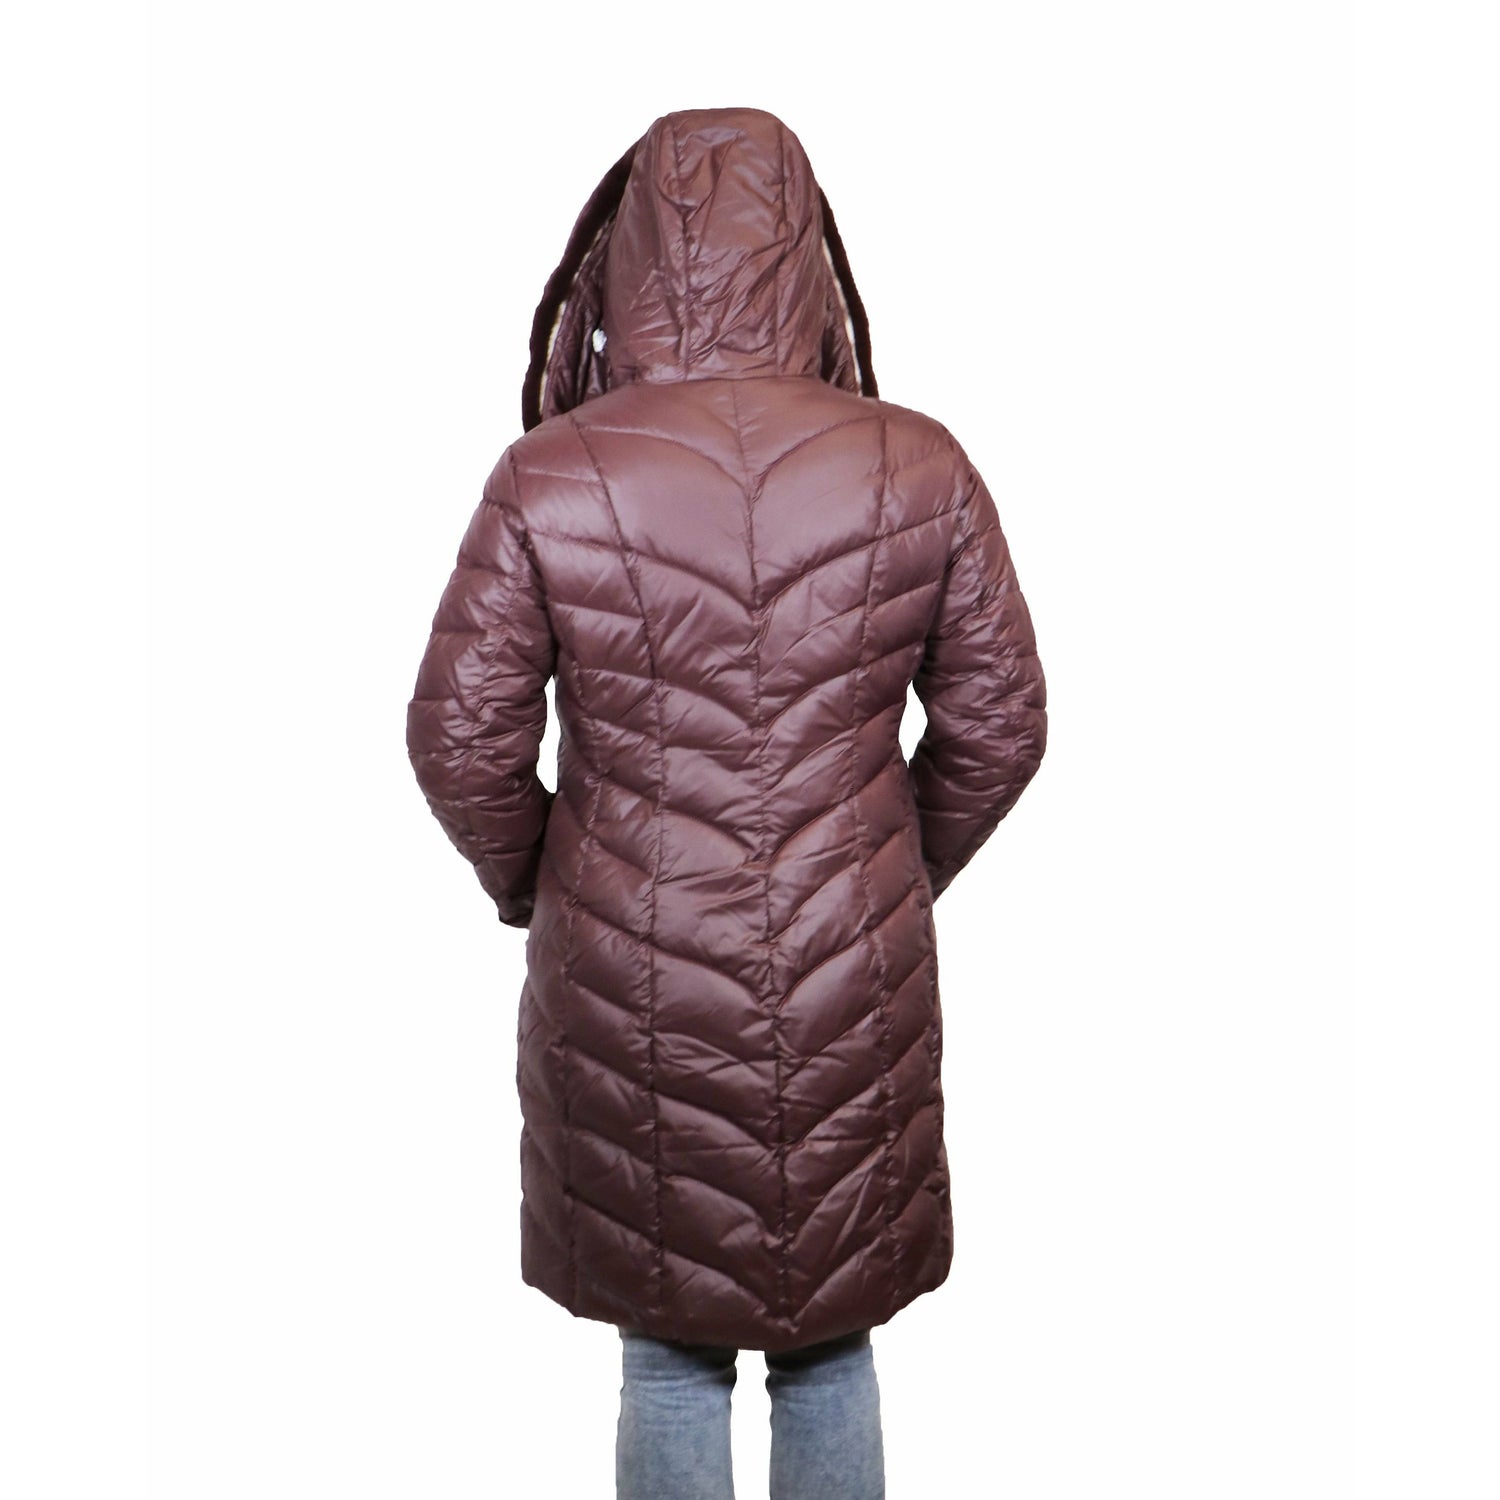 Vlasta Women's Puffer Winter Coat